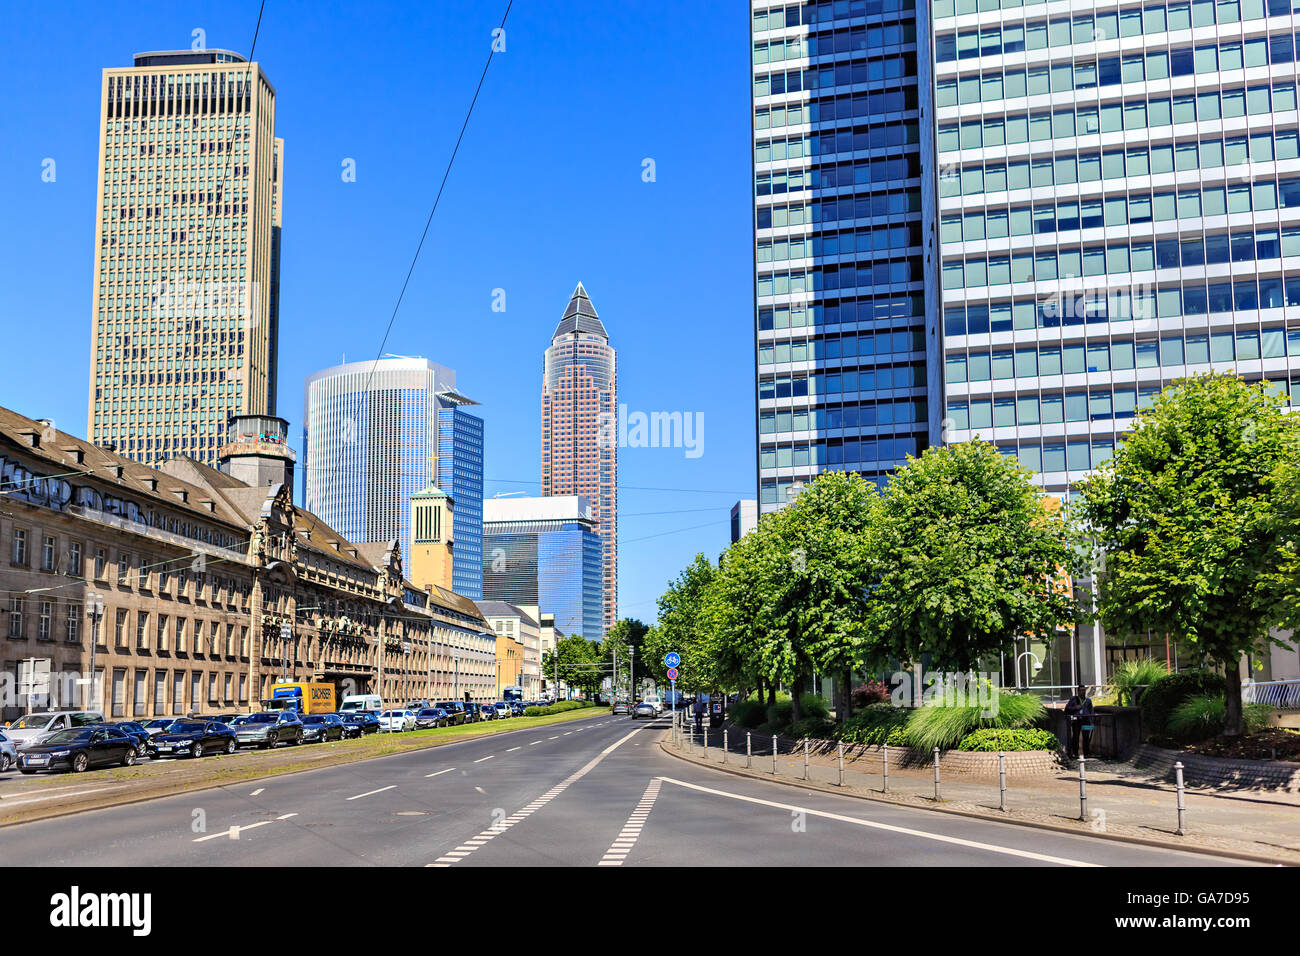 FRANKFURT ON THE MAIN, GERMANY - CIRCA JUNE, 2016: The City of Frankfurt on the Main, Germany Stock Photo